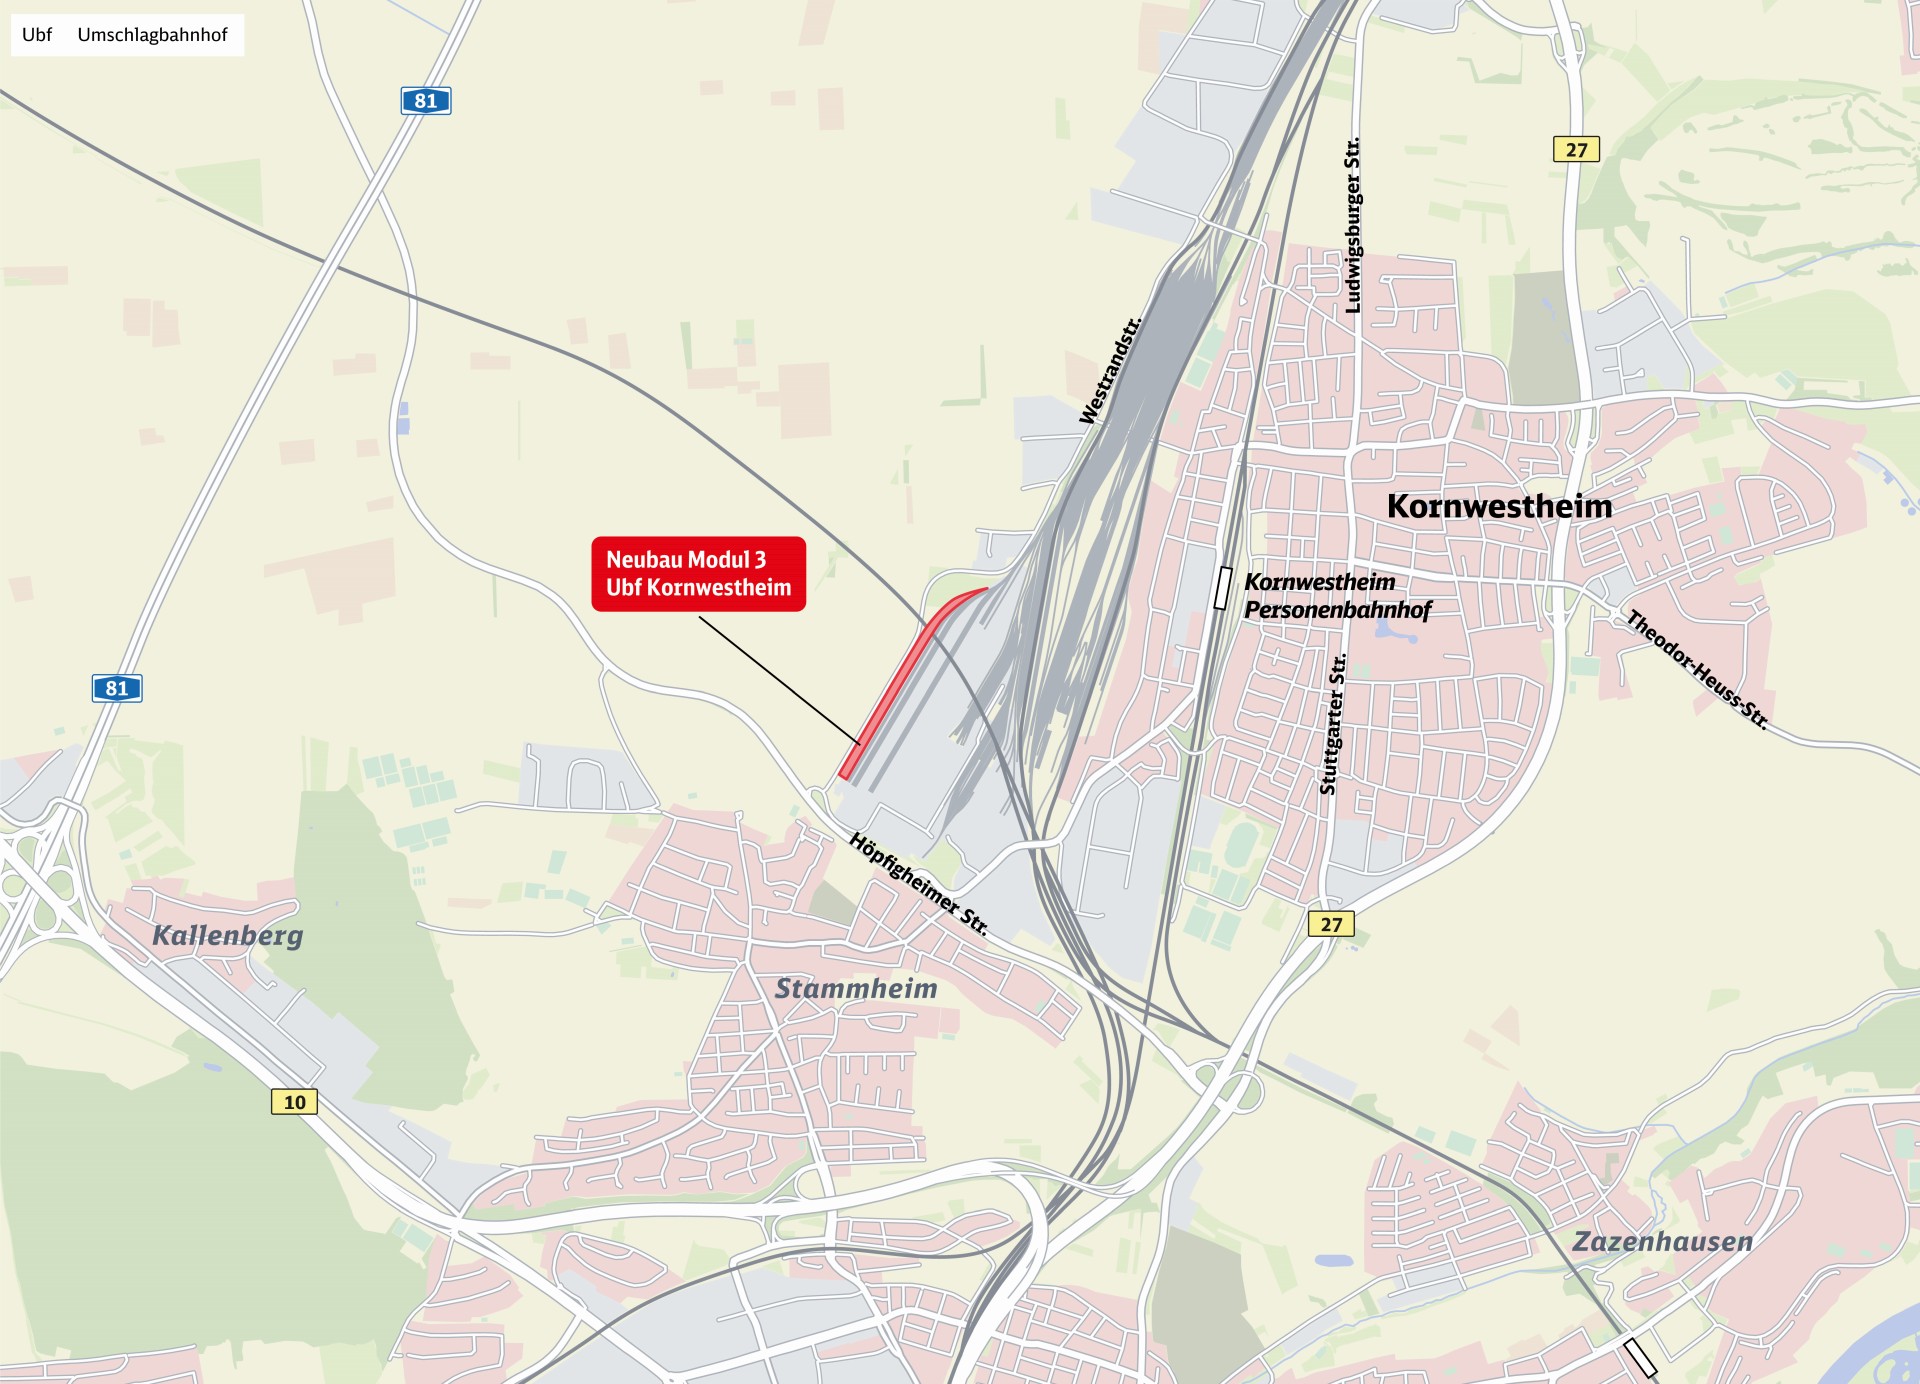 Übersichtskarte mit Neubau Modul 3 am KV-Terminal Kornwestheim